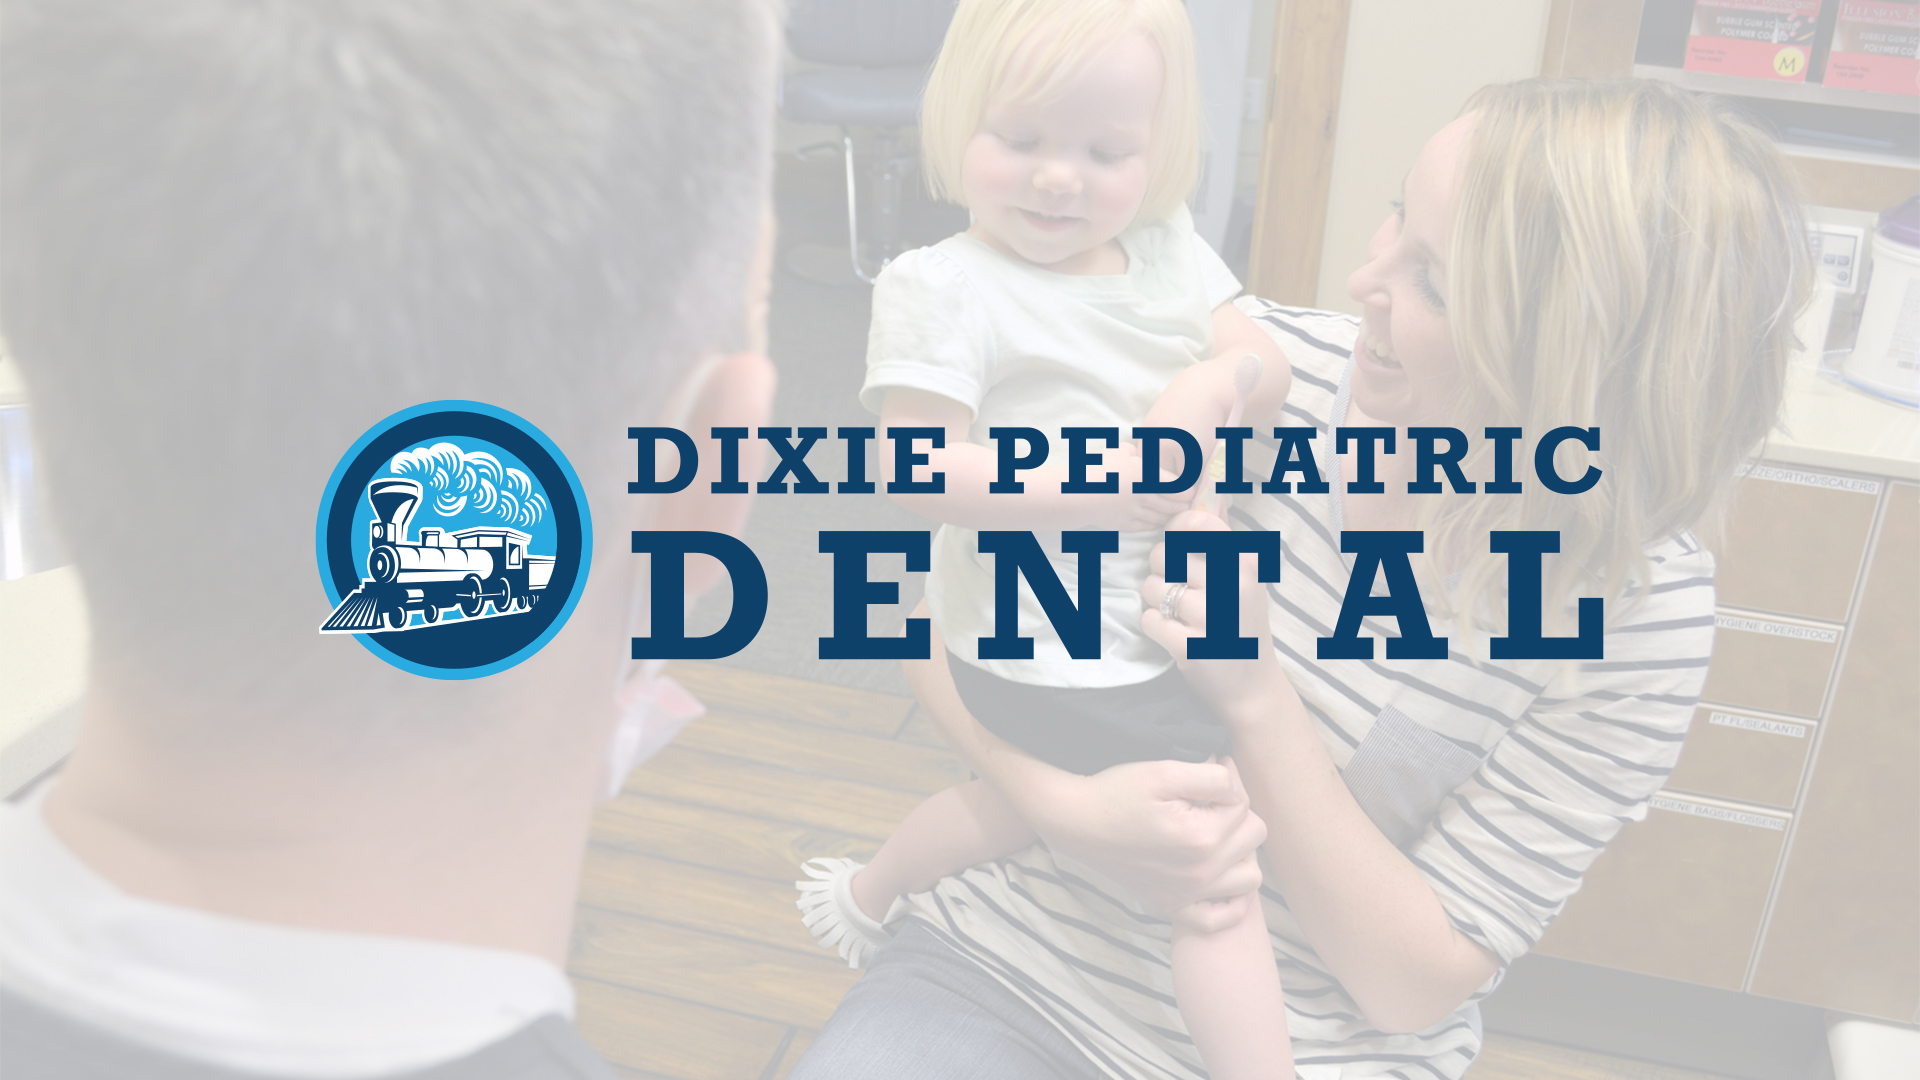 Dixie Pediatric Dental: Home - St. George